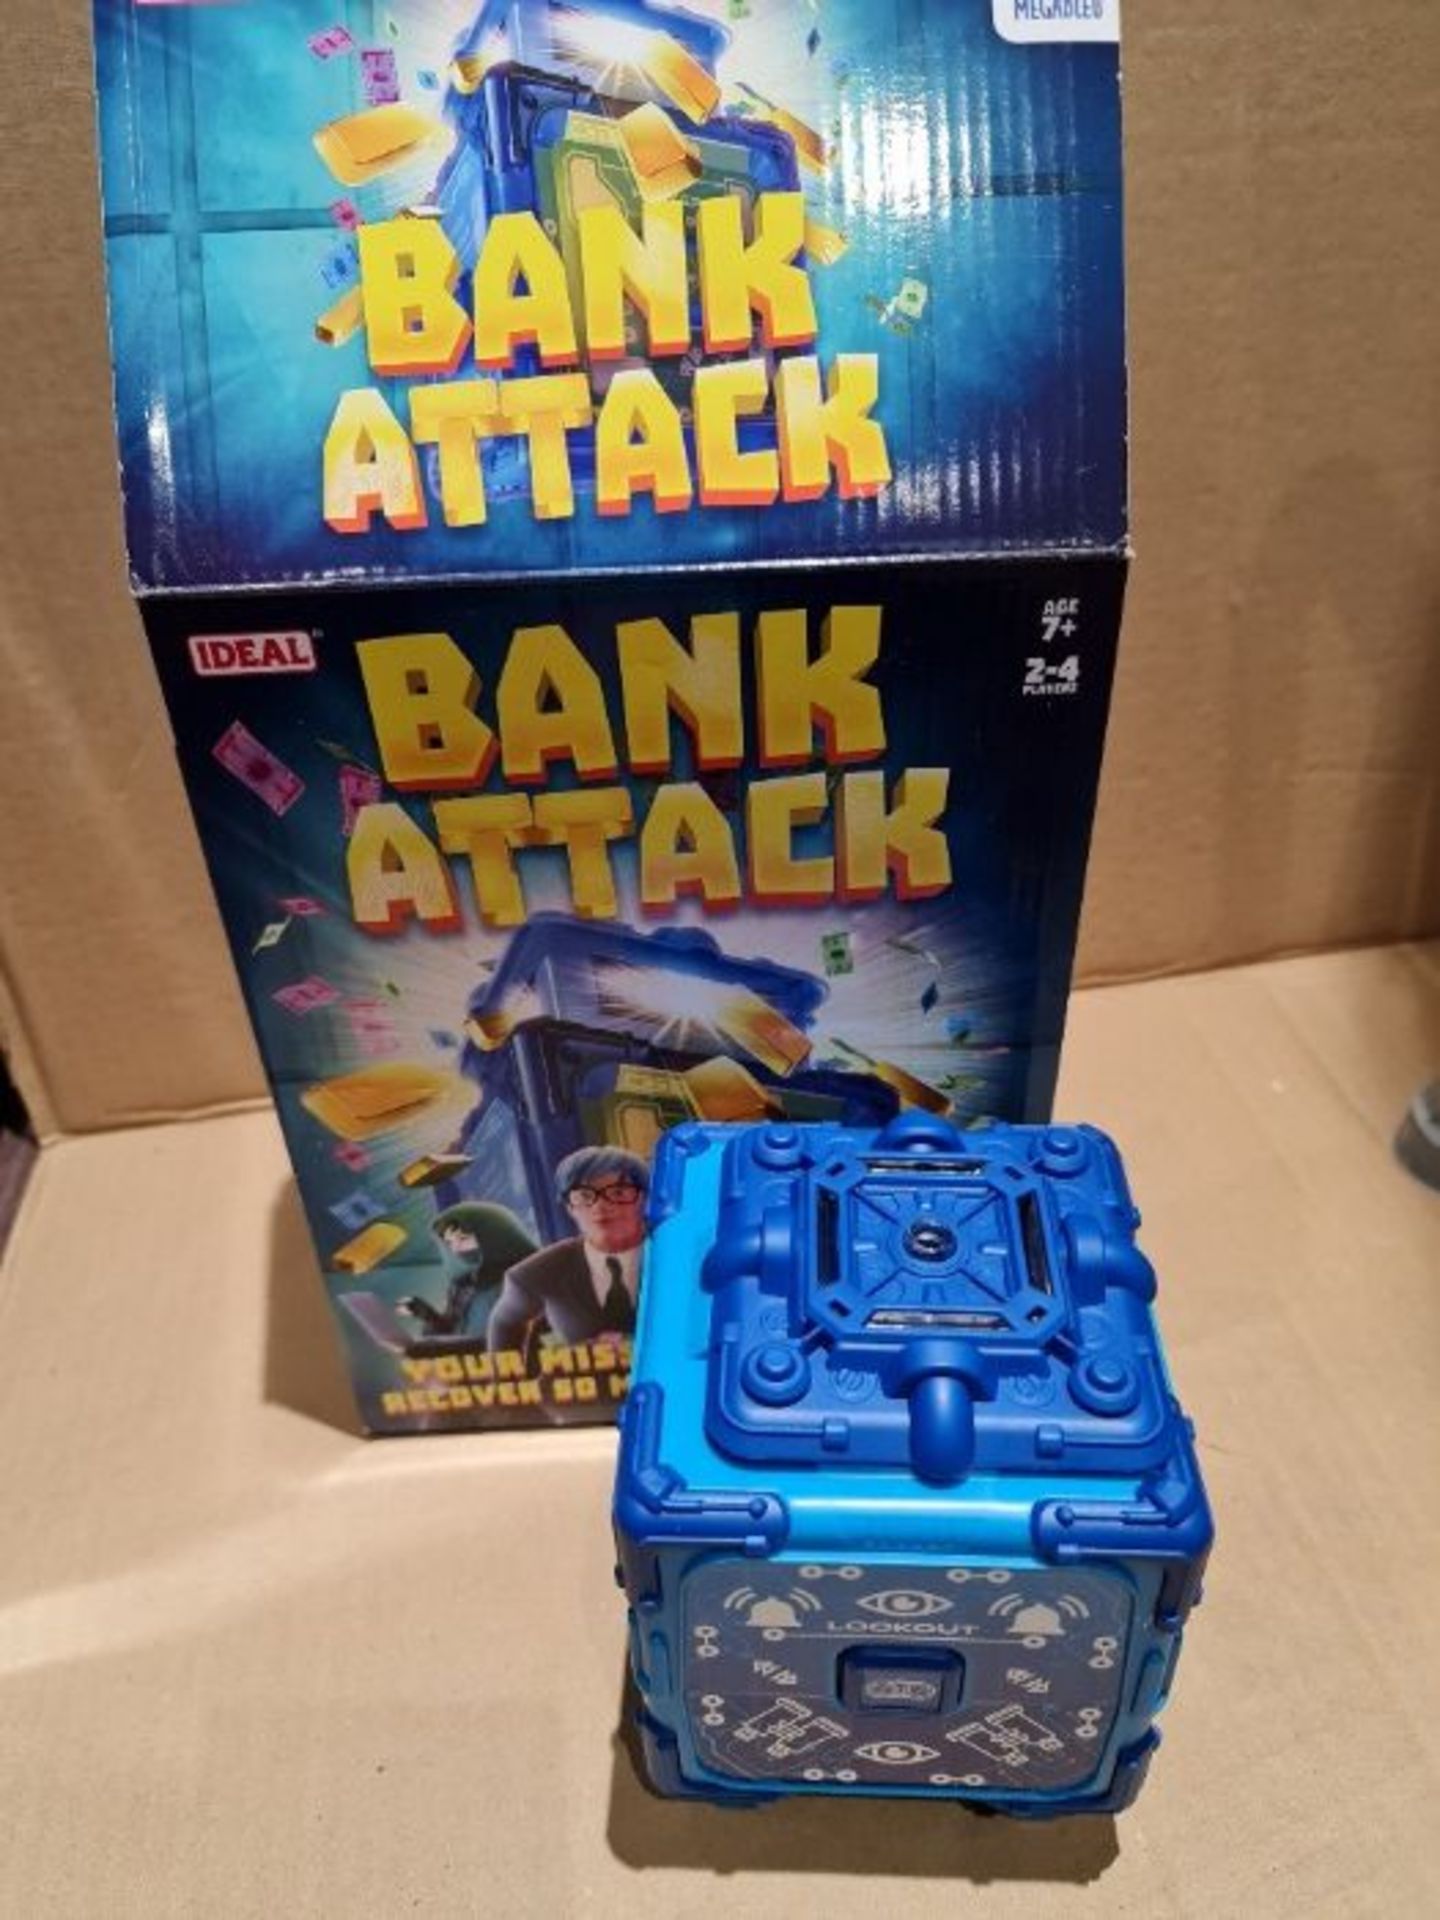 John Adams 10790 Bank Attack Game, Multi - Image 2 of 2